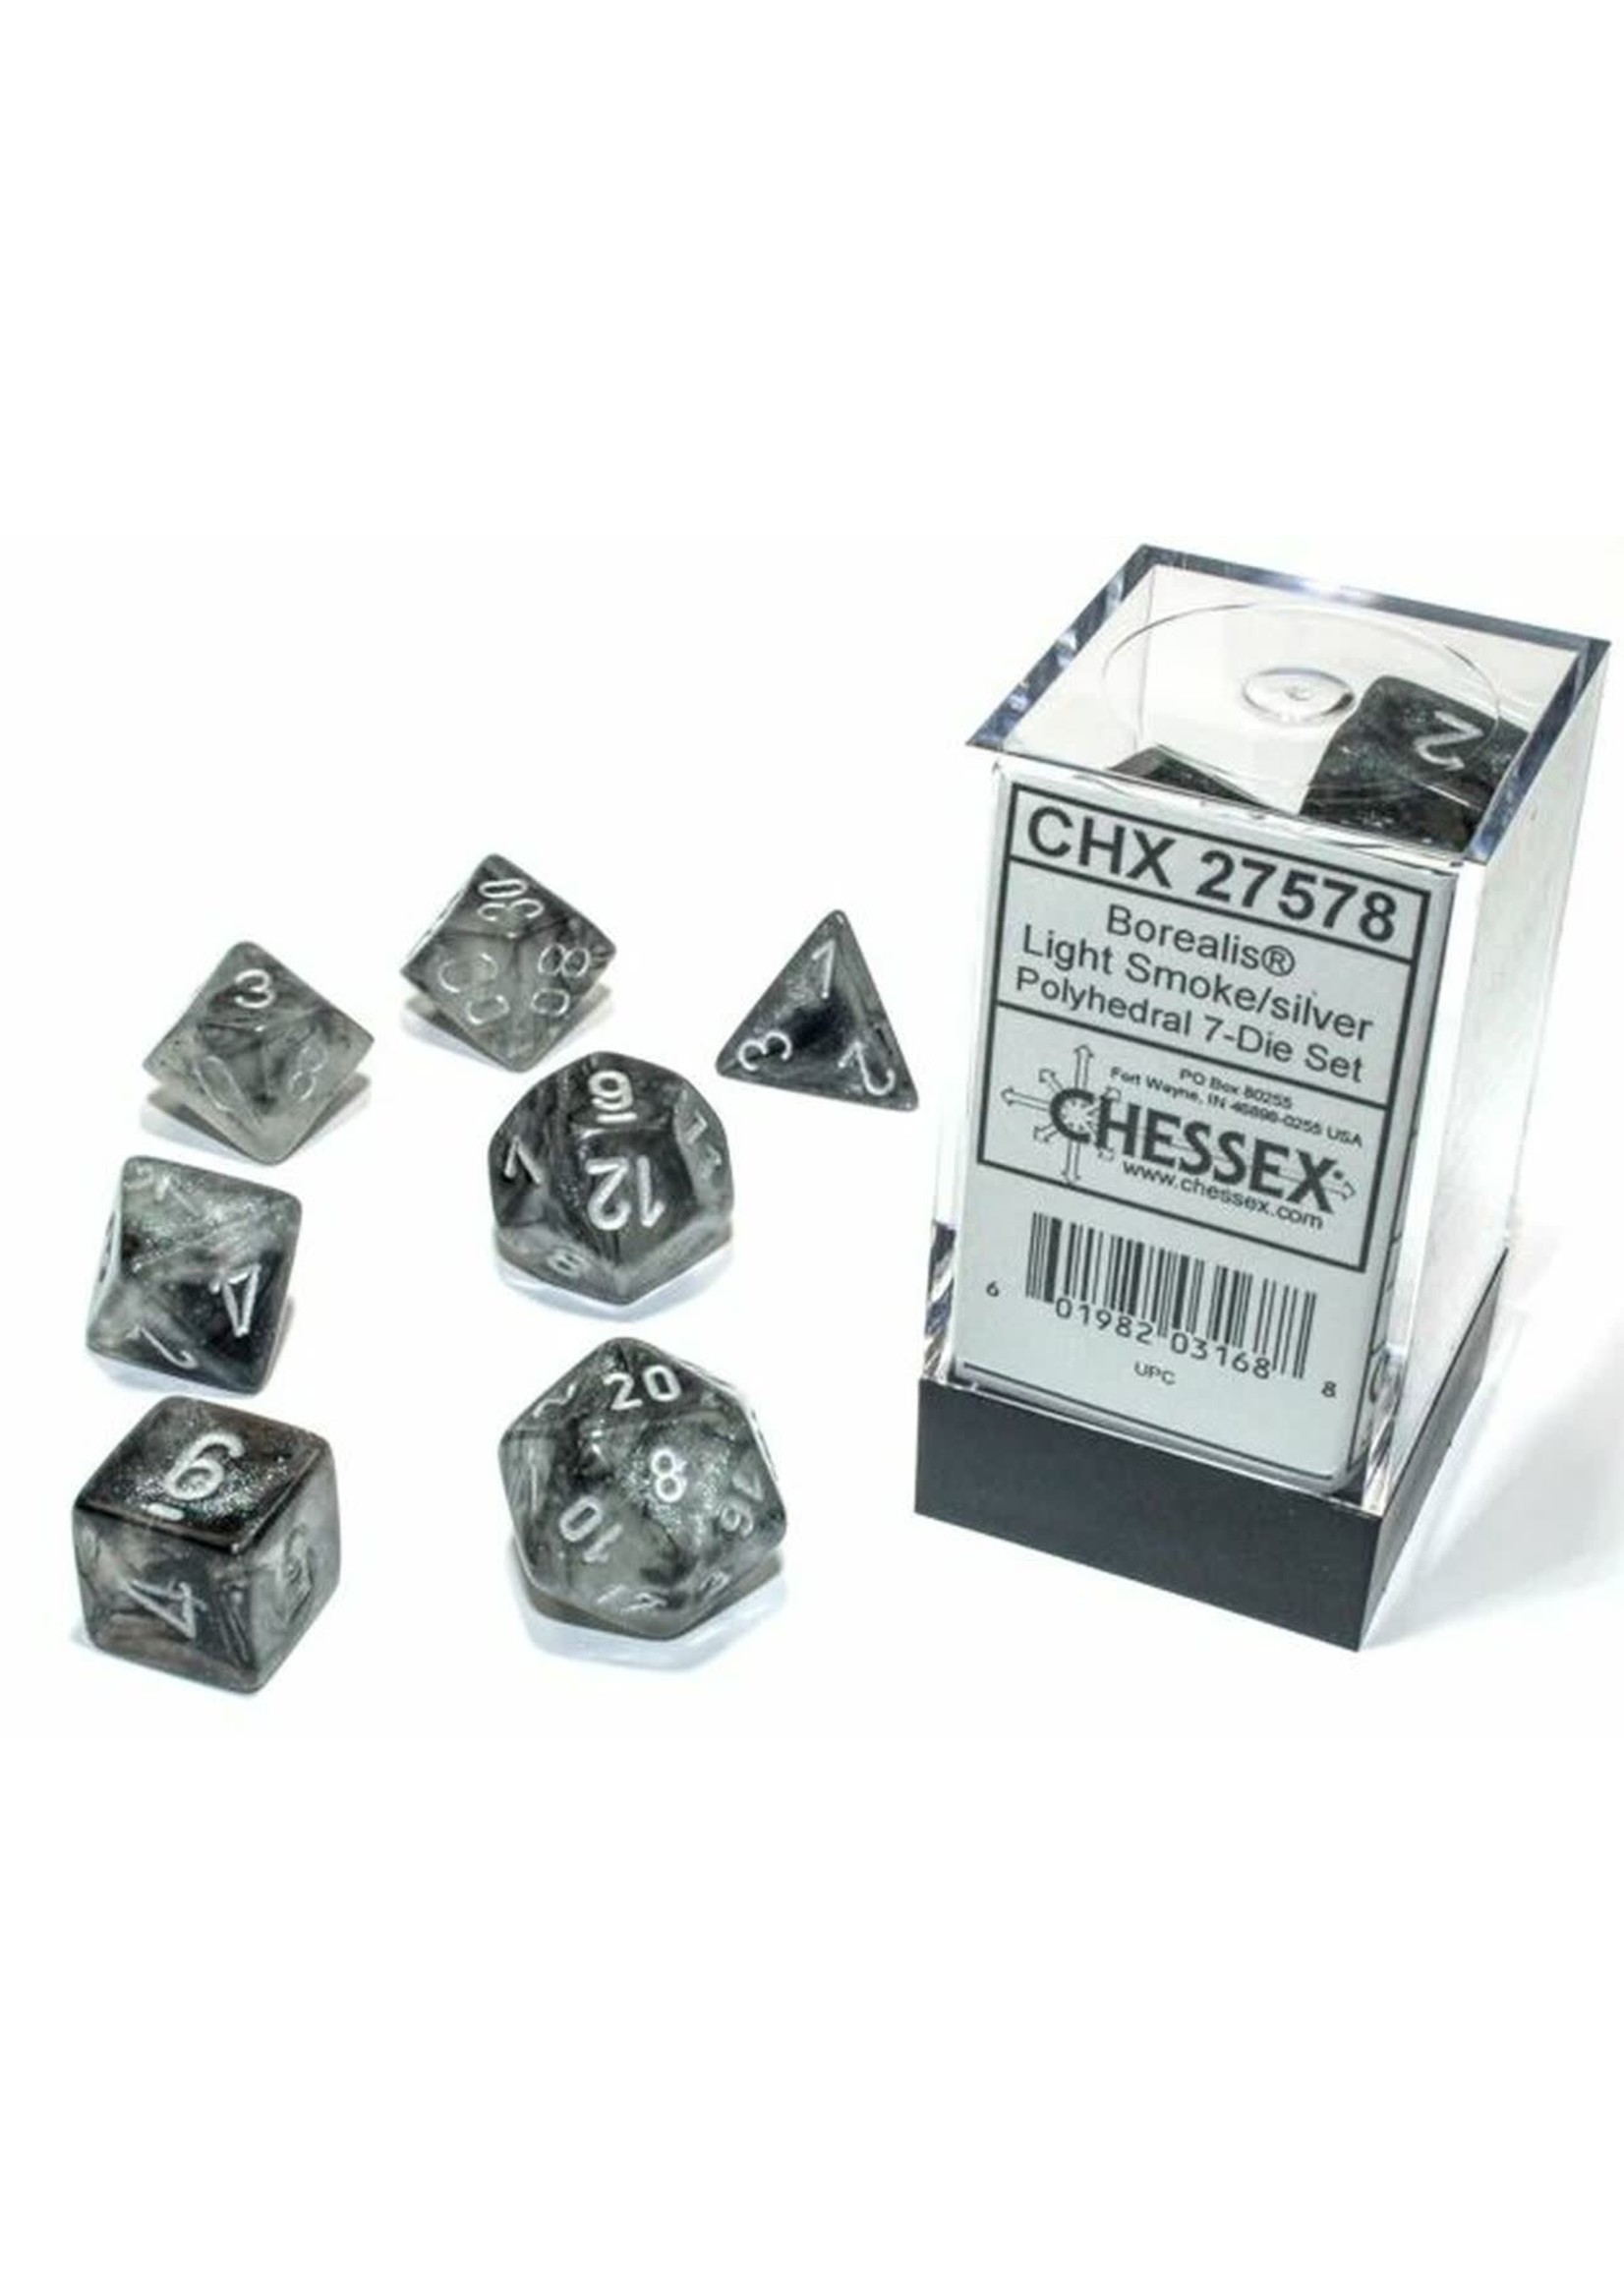 Chessex Borealis Luminary Poly 7 set: Light Smoke w/ Silver